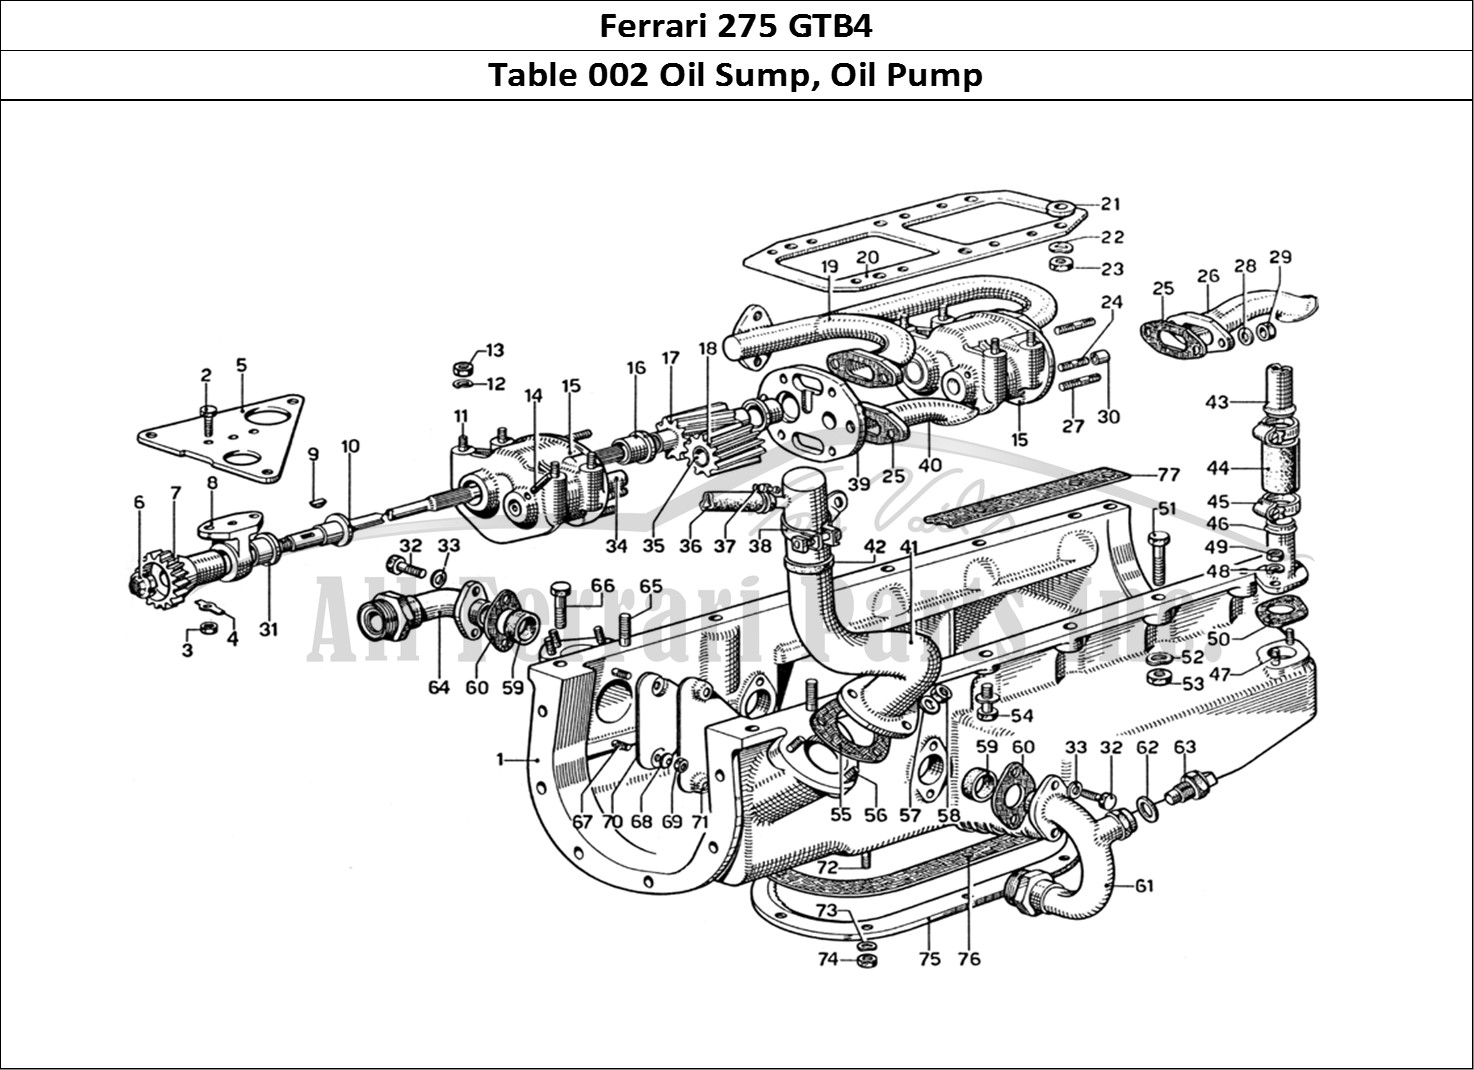 Ferrari Parts Ferrari 275 GTB4 Page 002 Oil Sump and Scavenge Pum